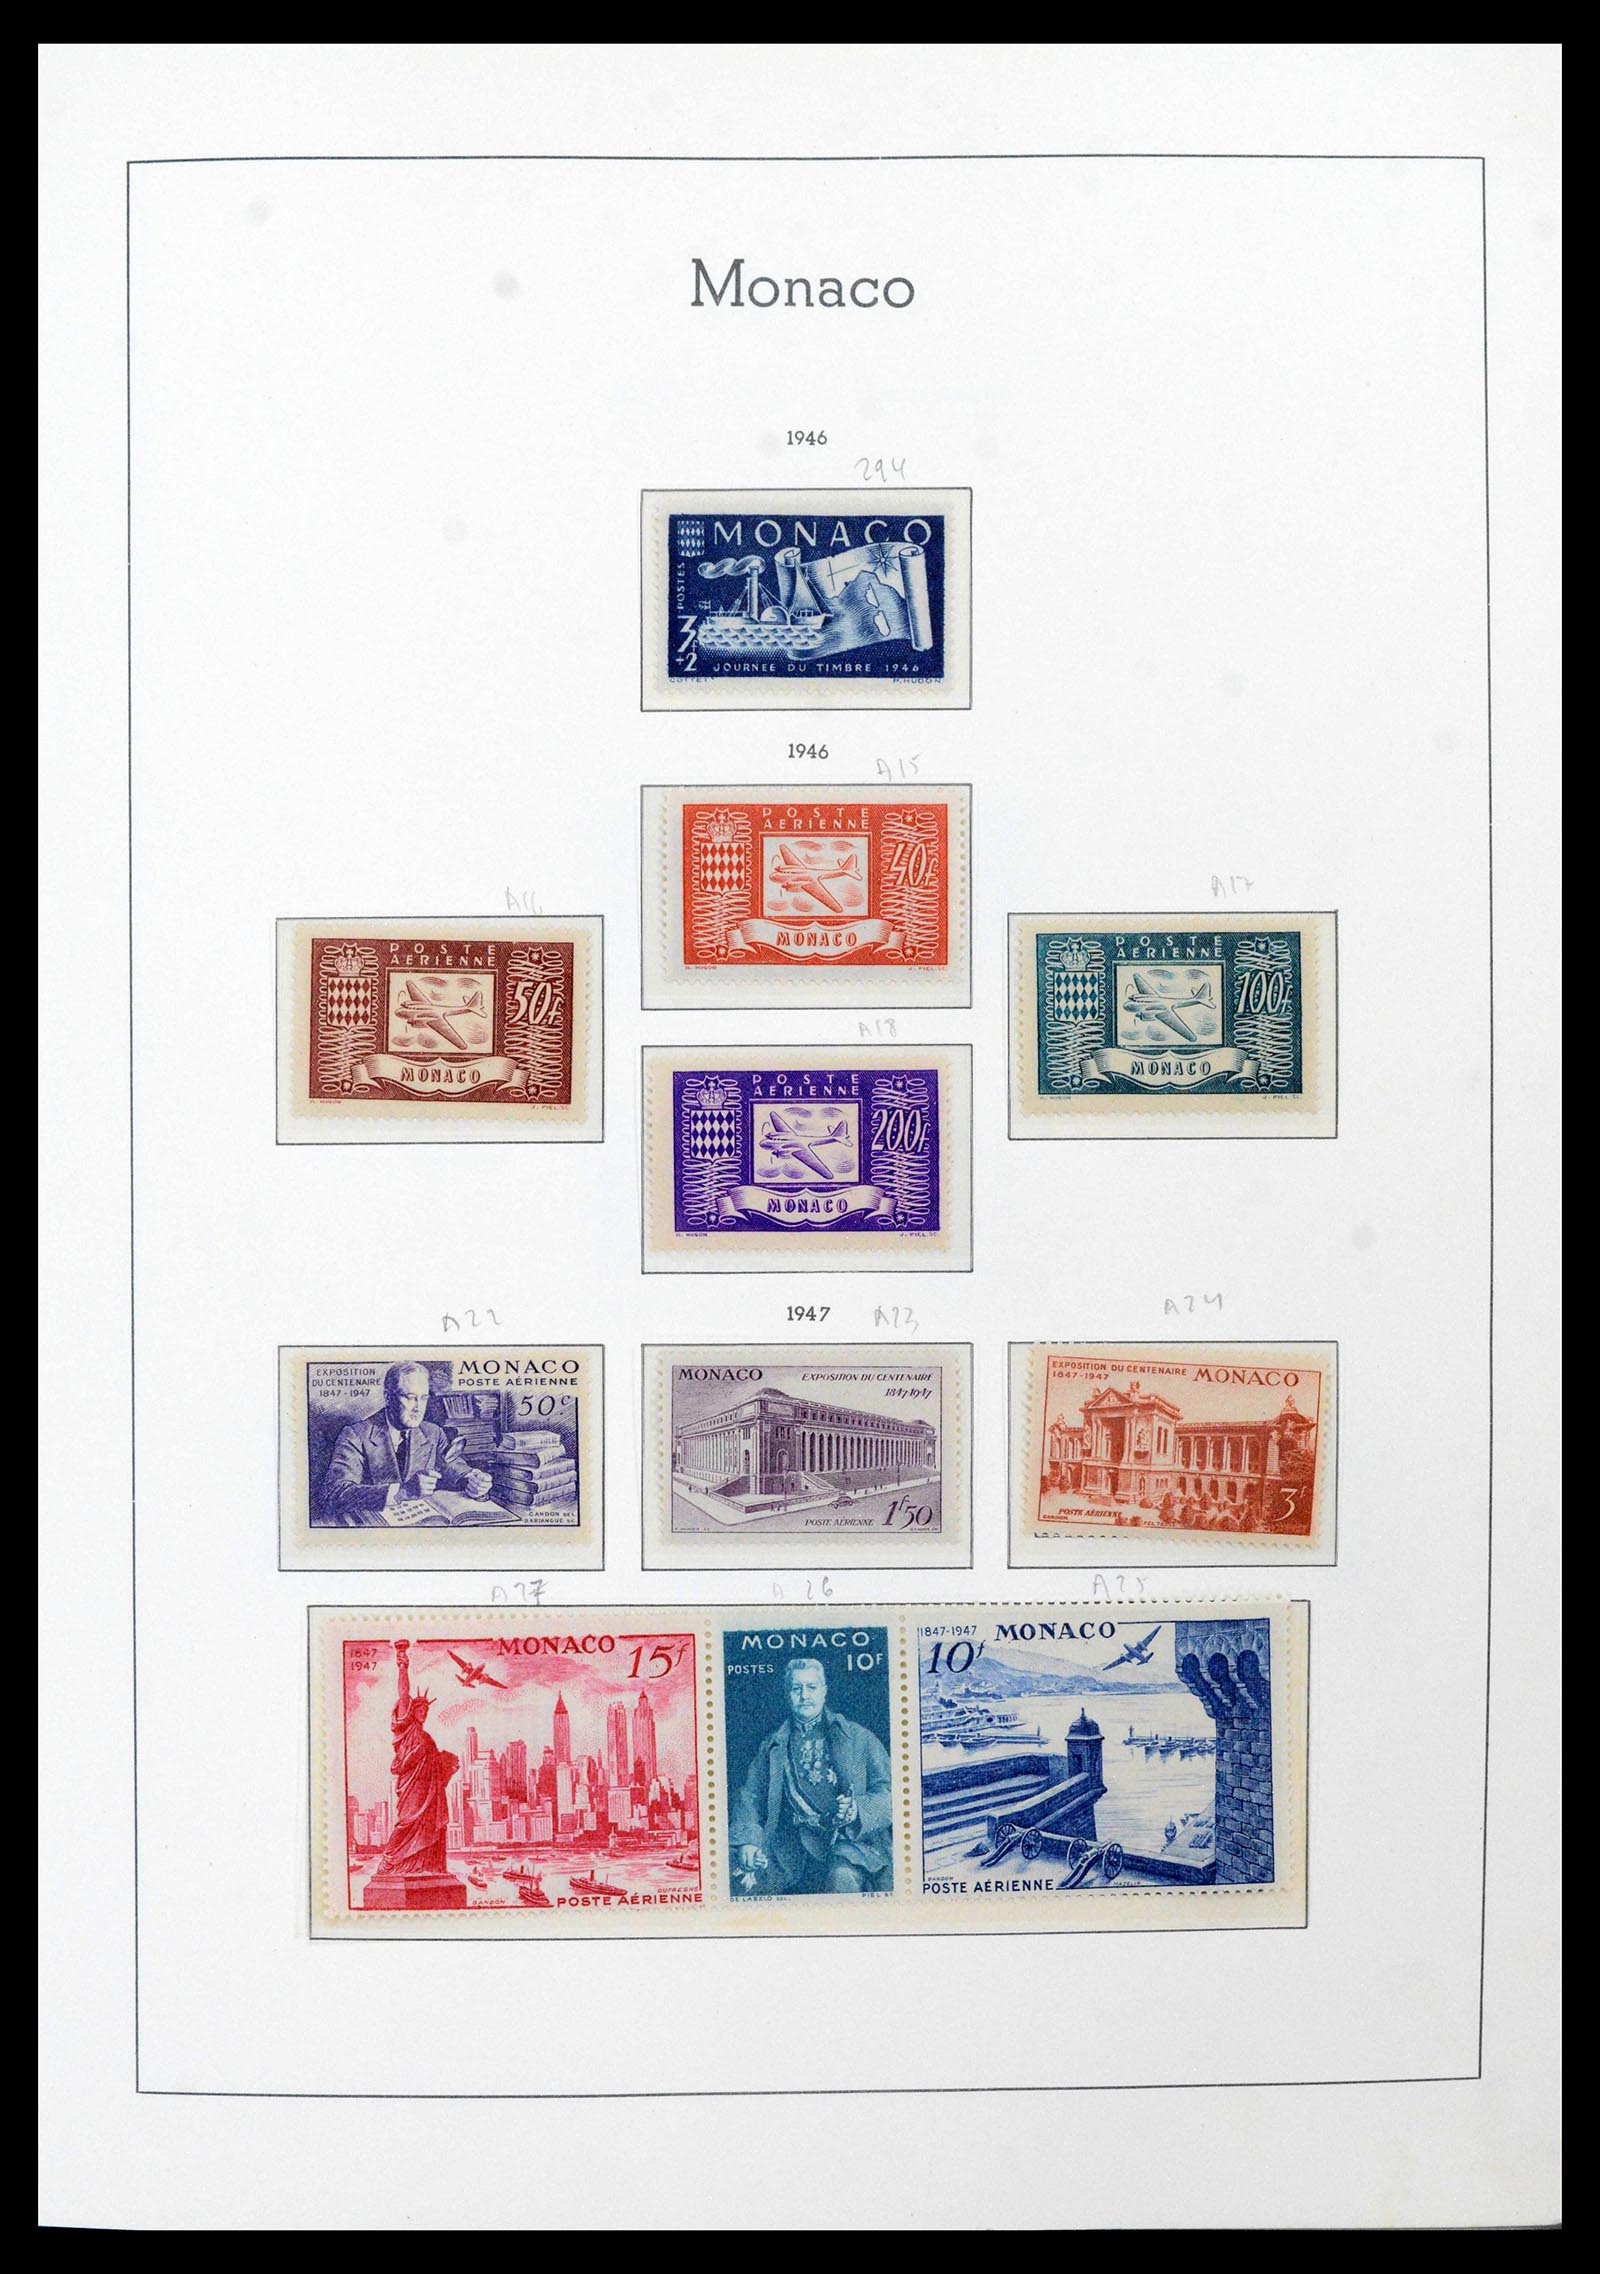 39250 0030 - Stamp collection 39250 Monaco 1885-1995.